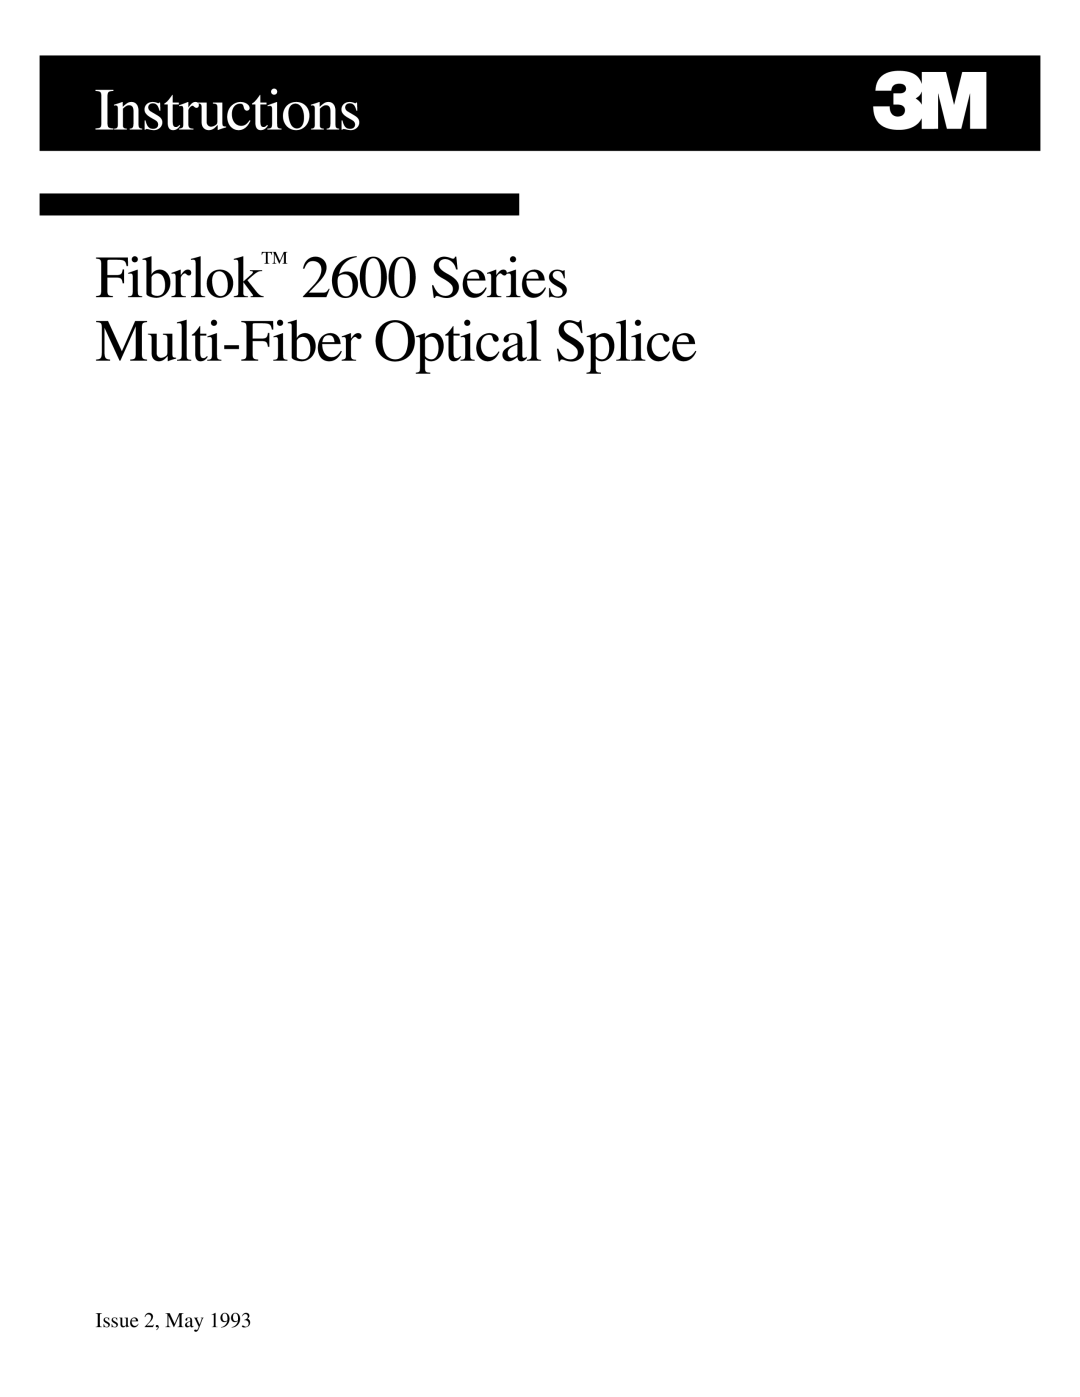 3M manual Instructions, FibrlokTM 2600 Series Multi-FiberOptical Splice, Issue 2, May 